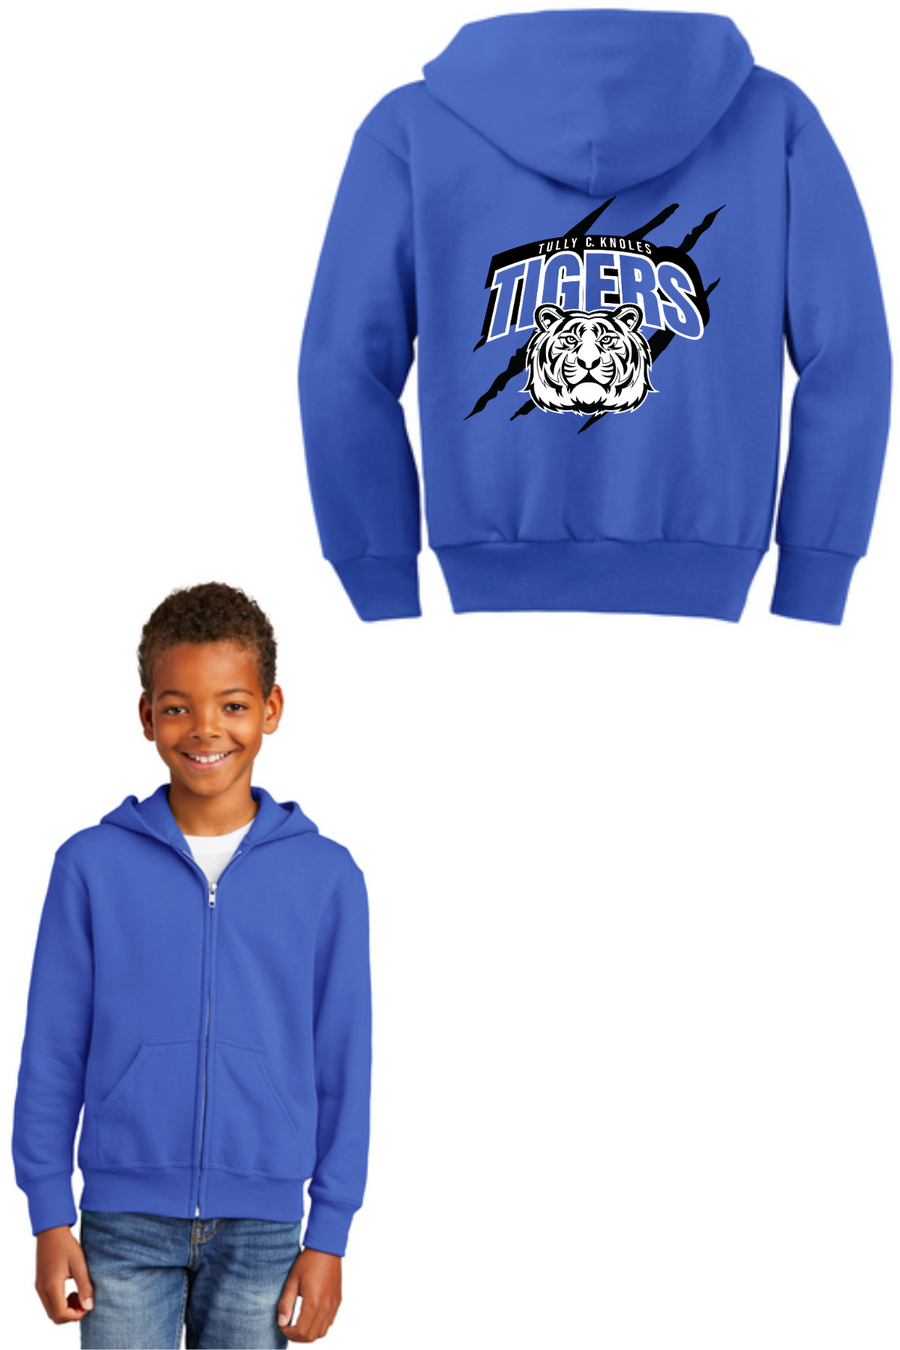 Tully C Knoles - Spirit Wear 23/24 On-Demand-Unisex Full-Zip Hooded Sweatshirt Tiger Logo